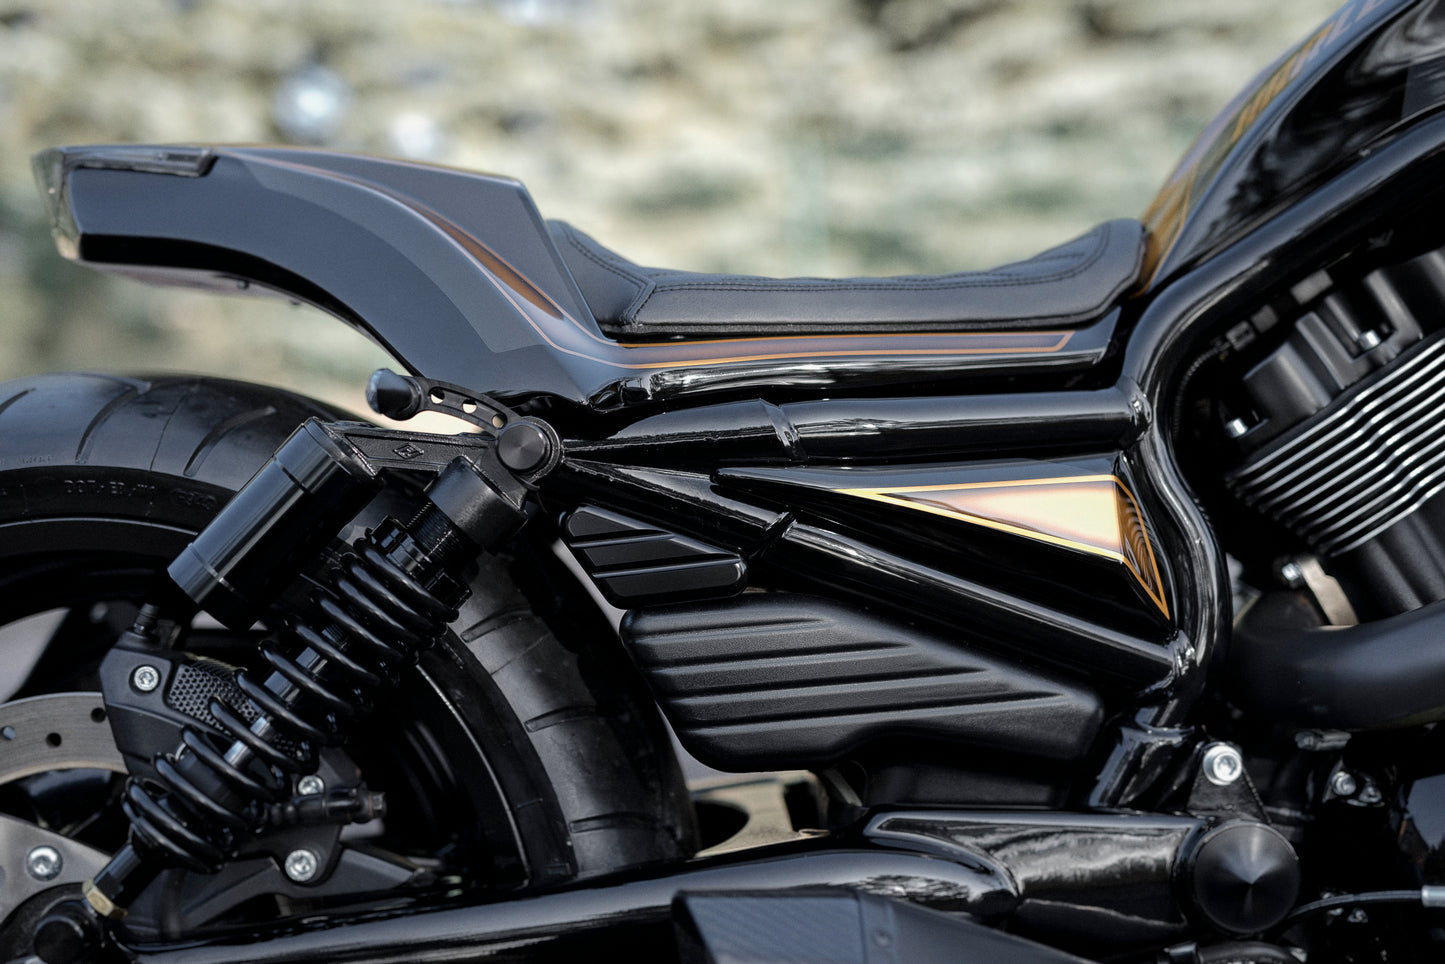 Zoomed Harley Davidson motorcycle with Killer Custom V-Rod billet turn signal bracket from the side blurry background